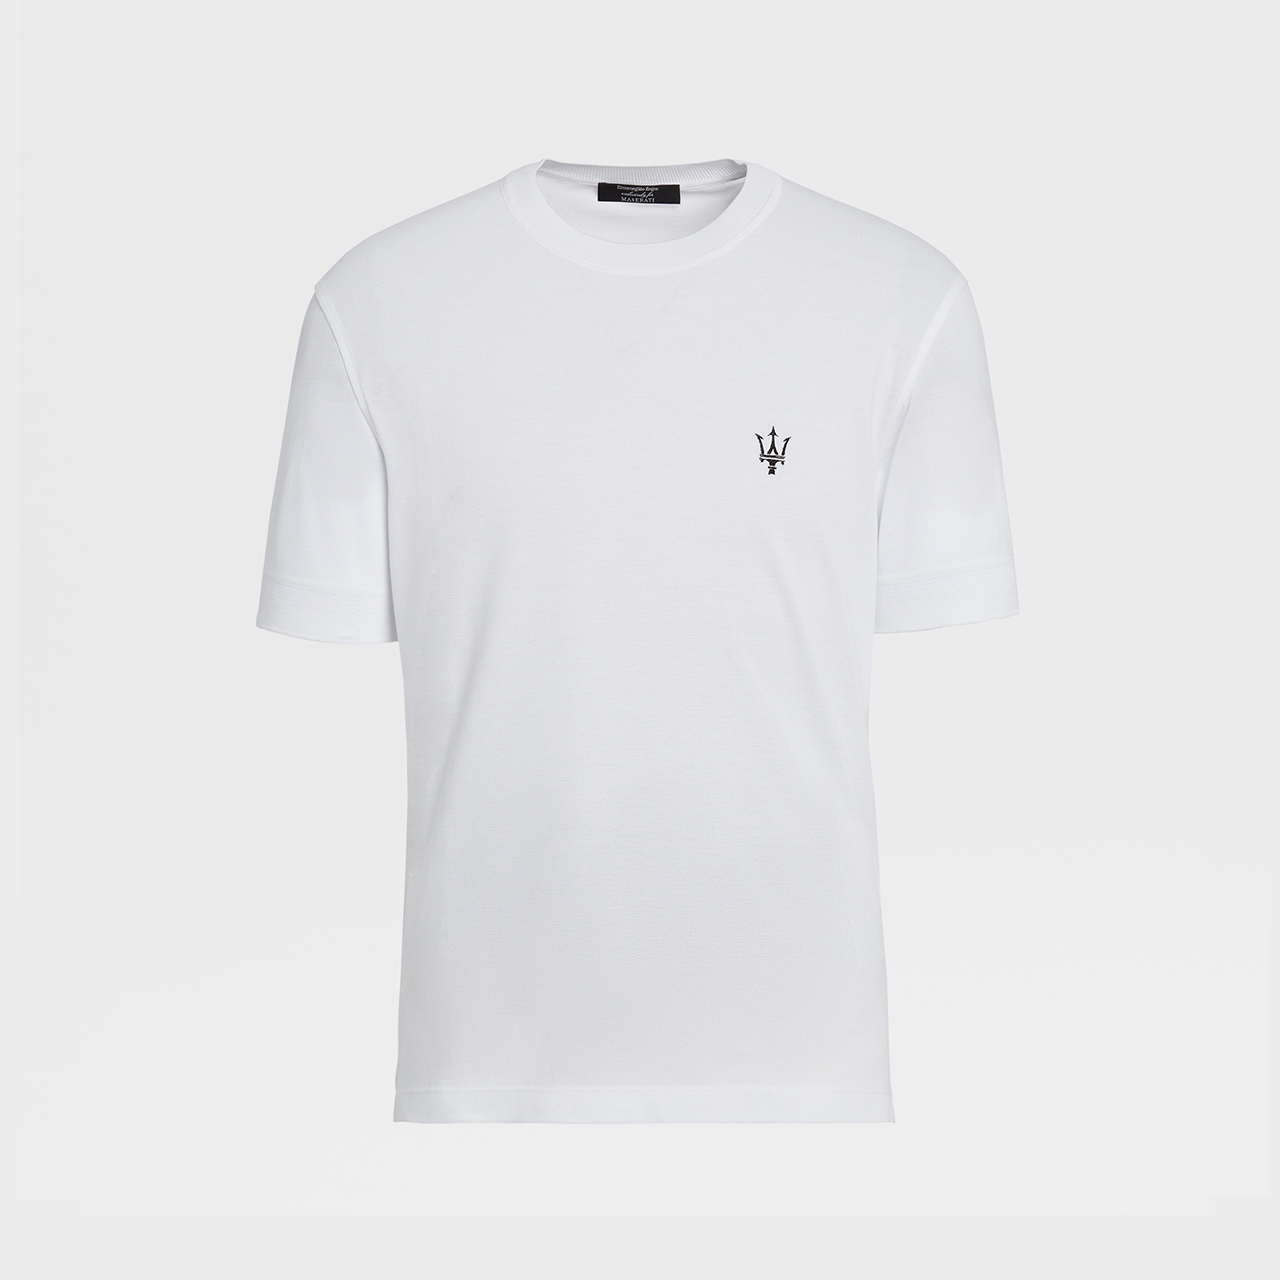 White t-shirt with Maserati trident logo